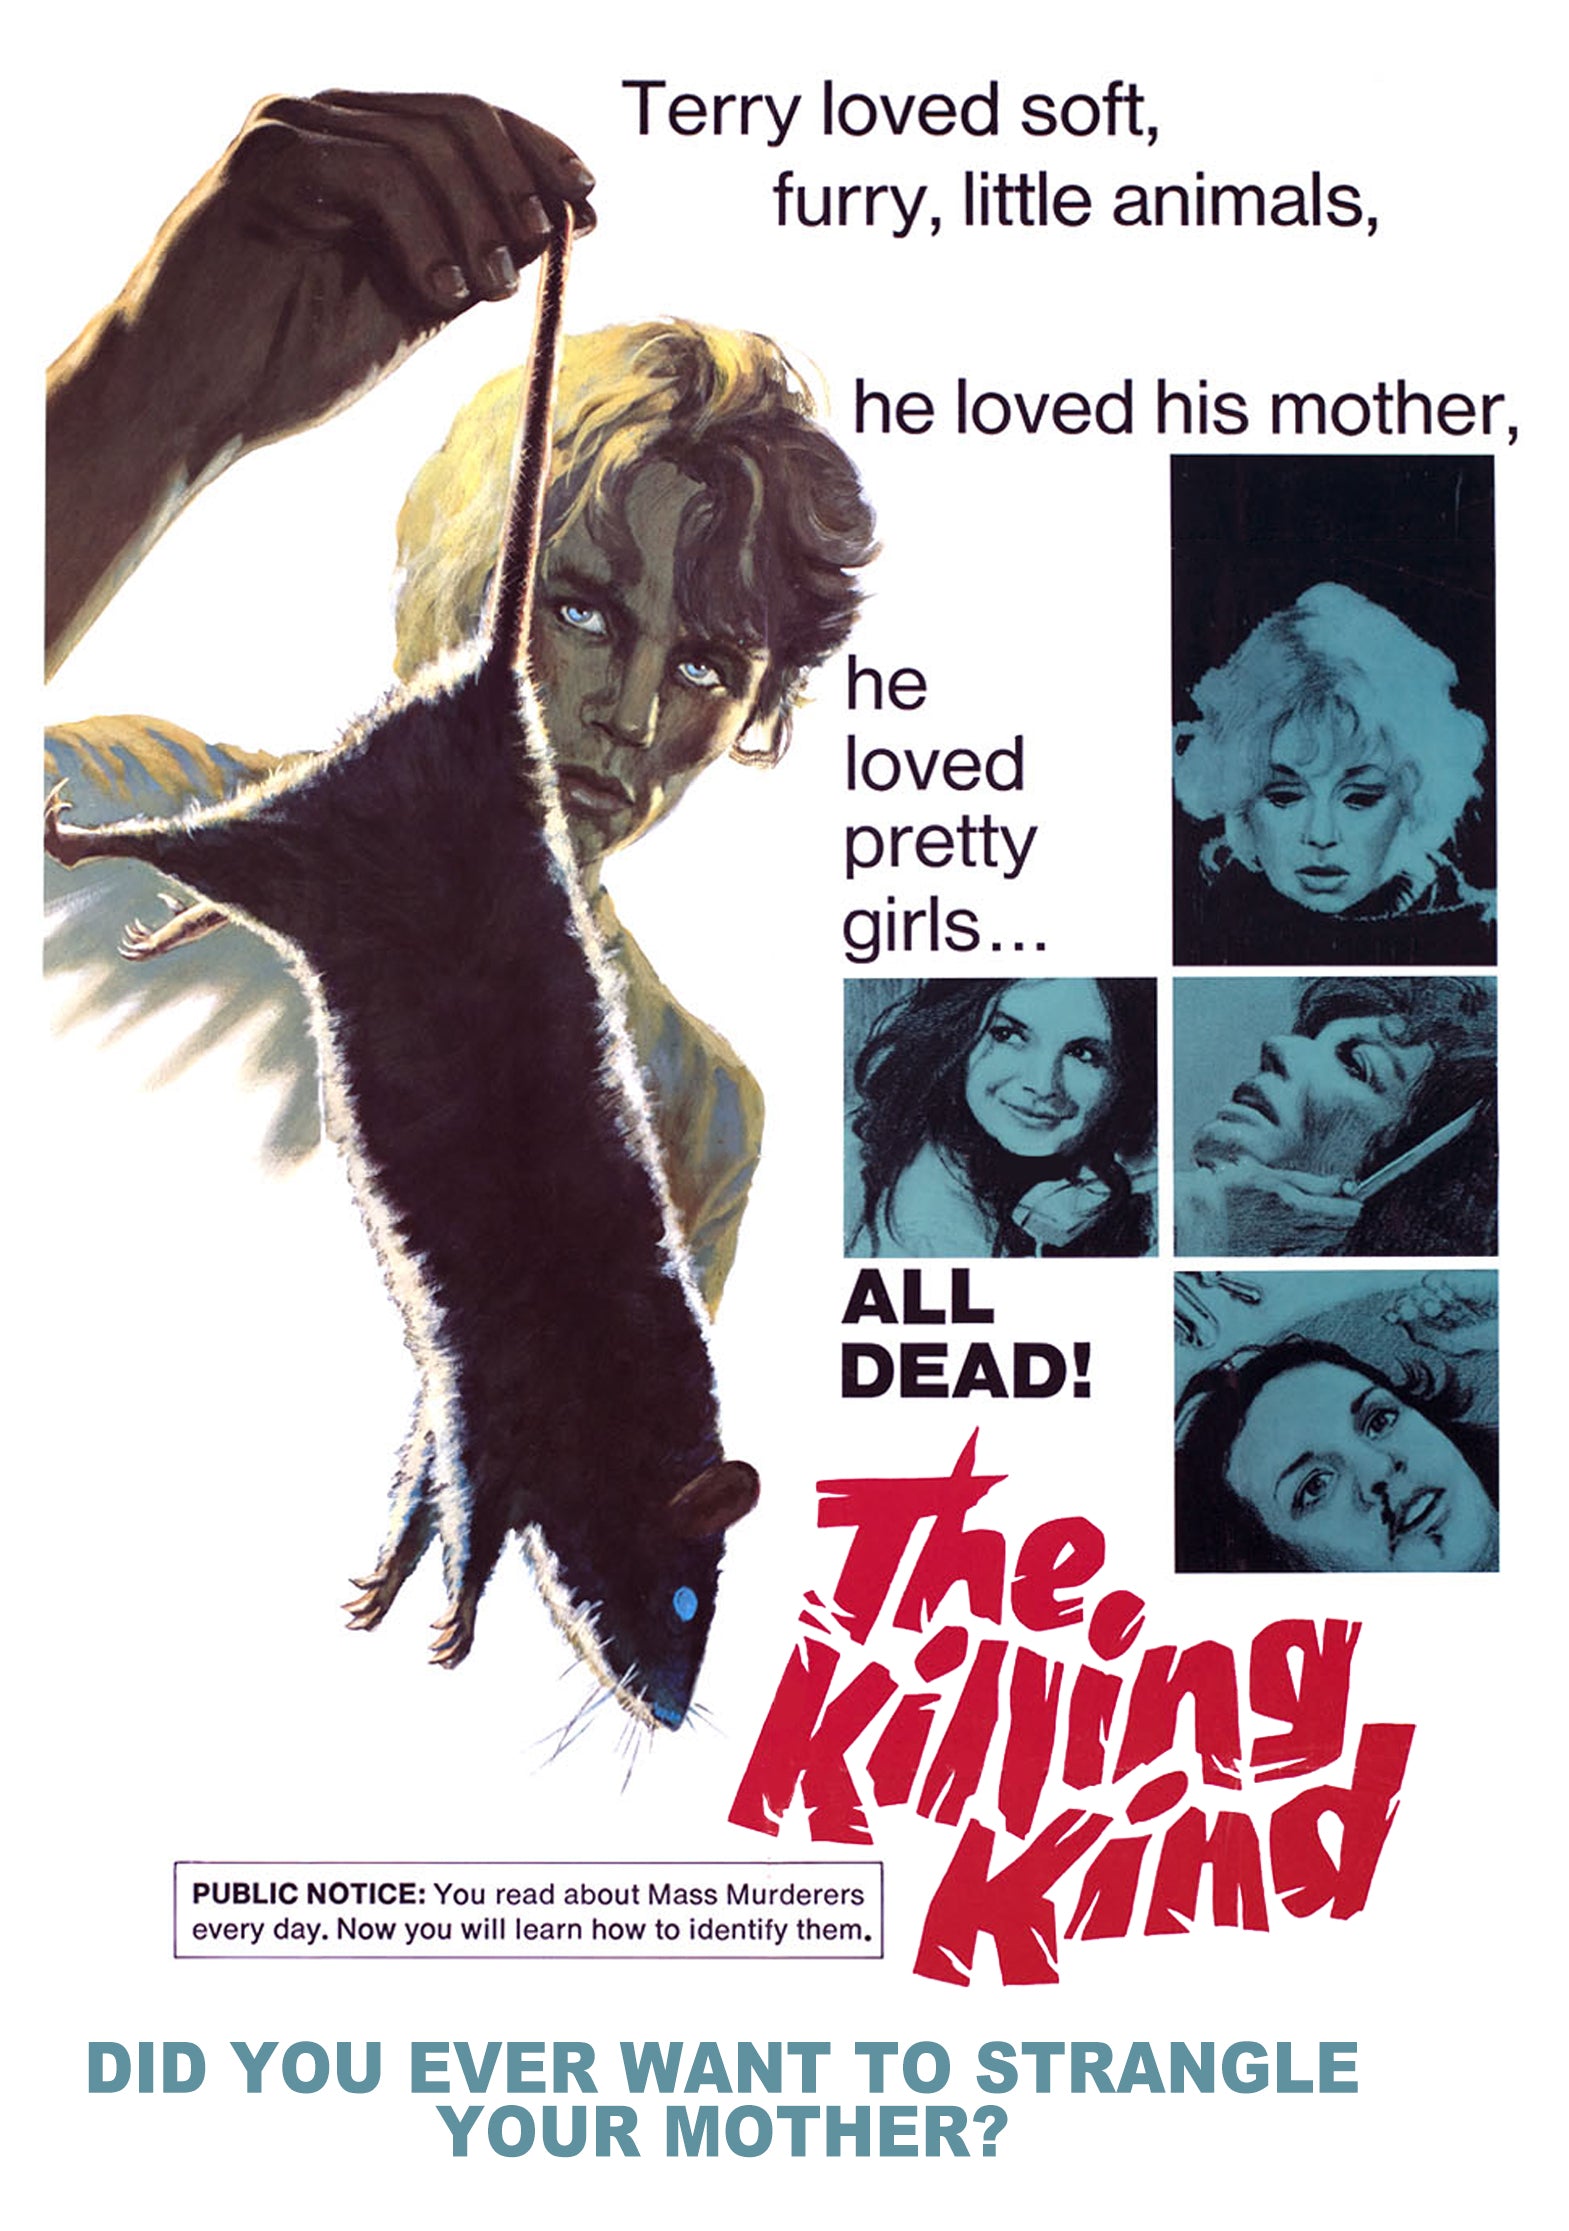 THE KILLING KIND DVD